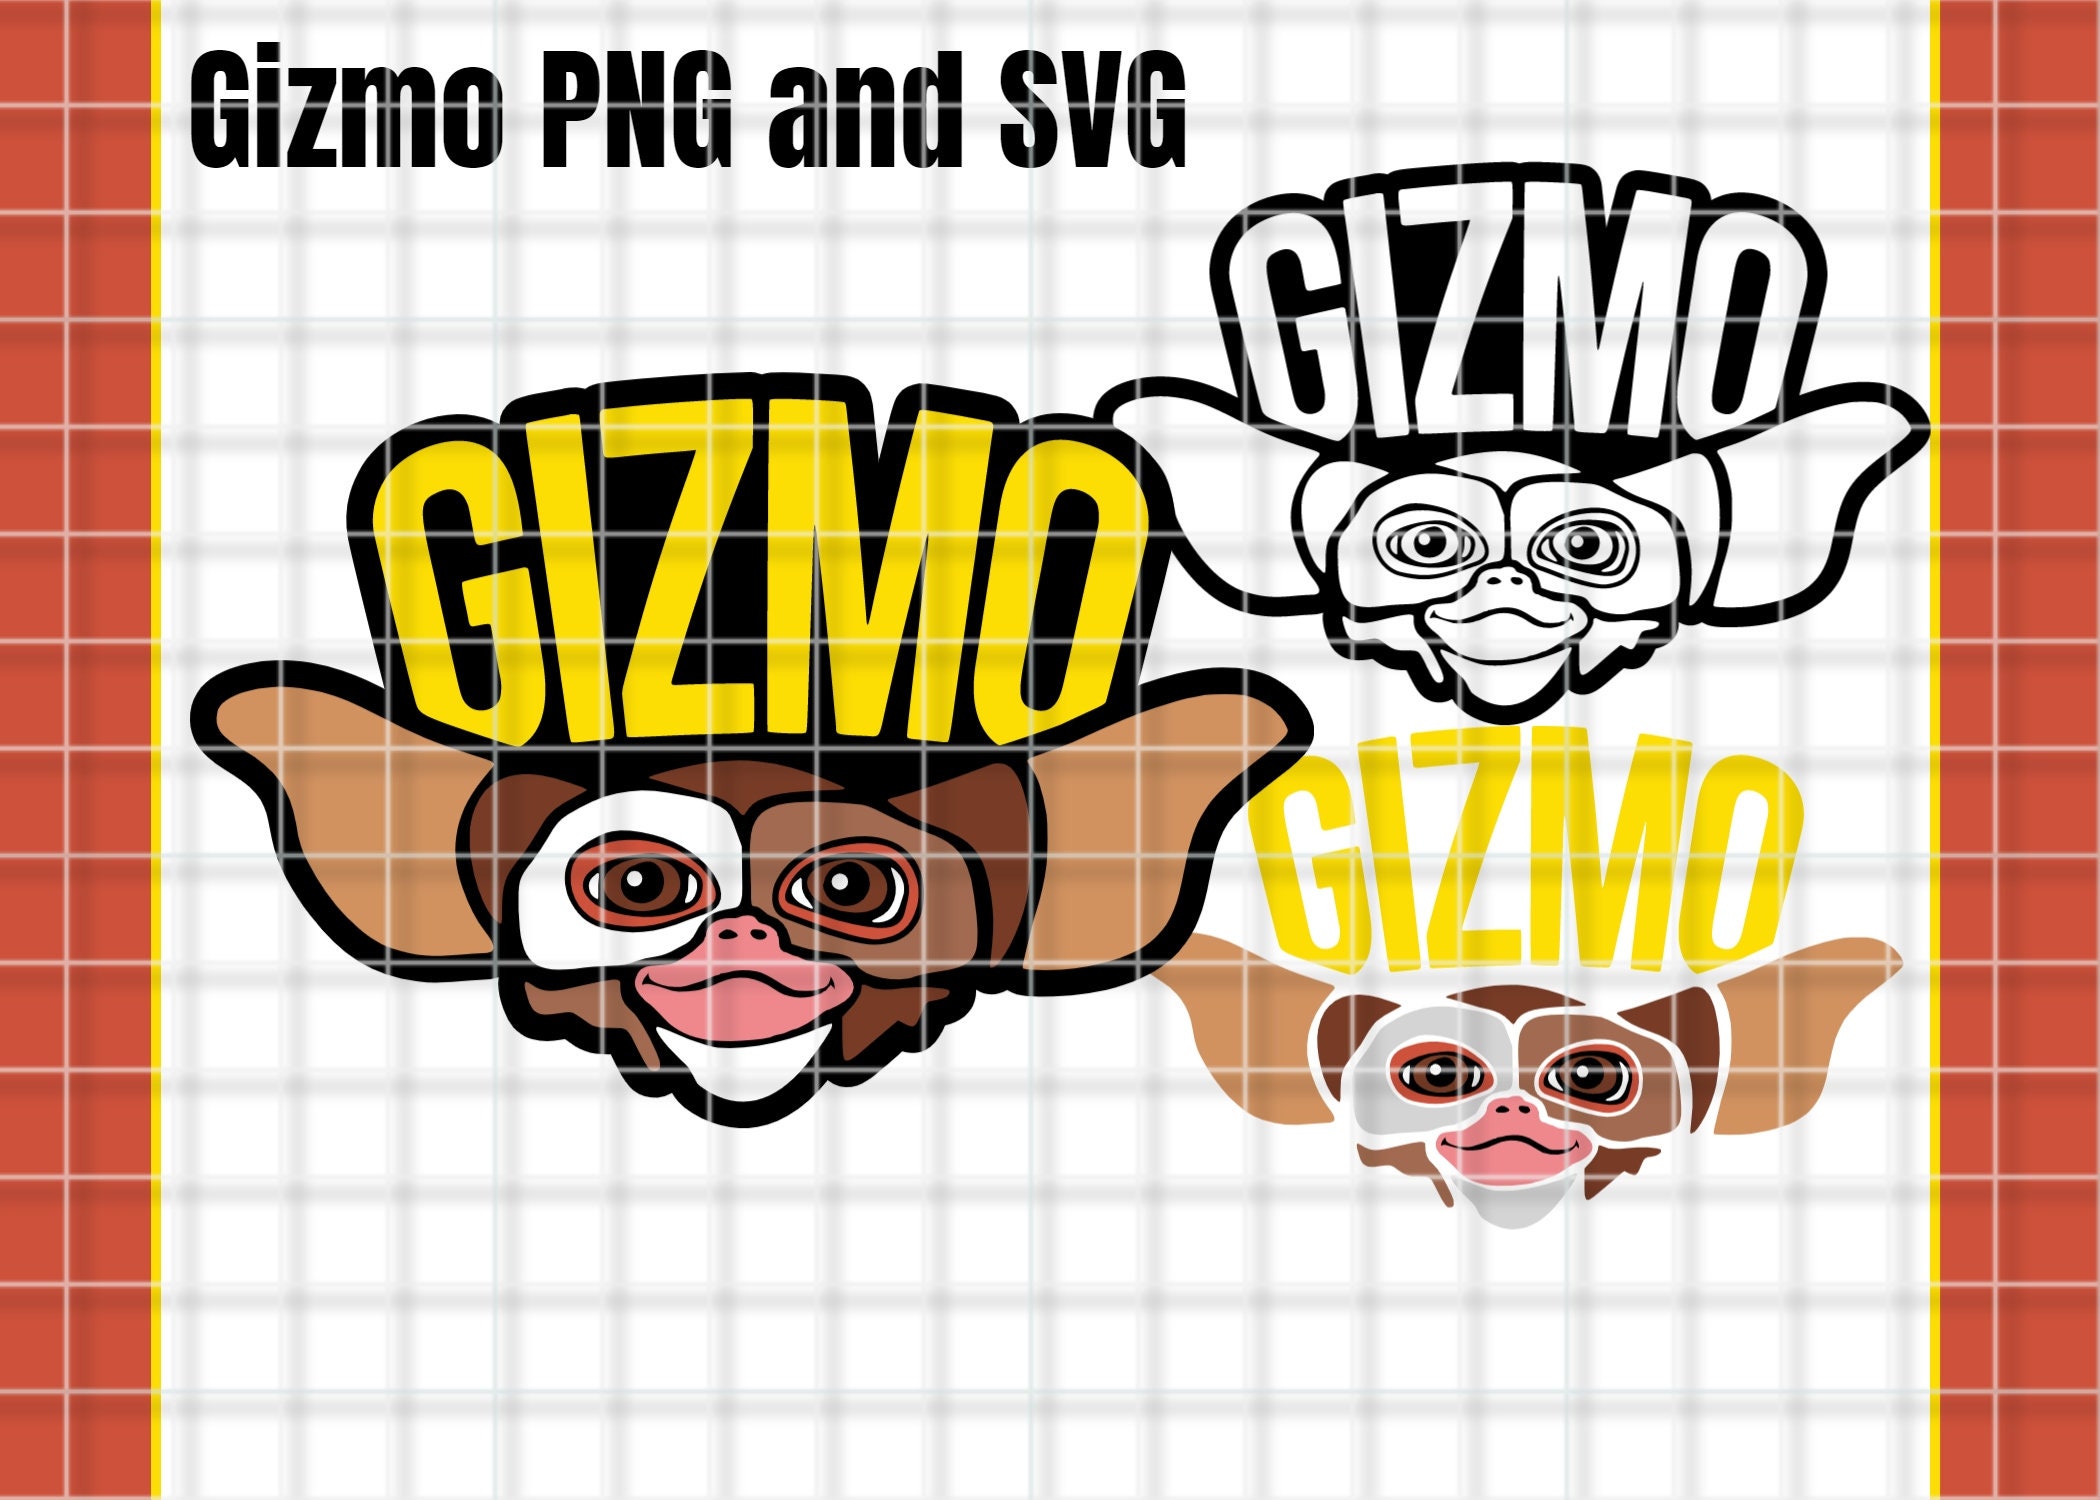 Gizmo (Gremlin) Layered Design for cutting - LaserCraftum